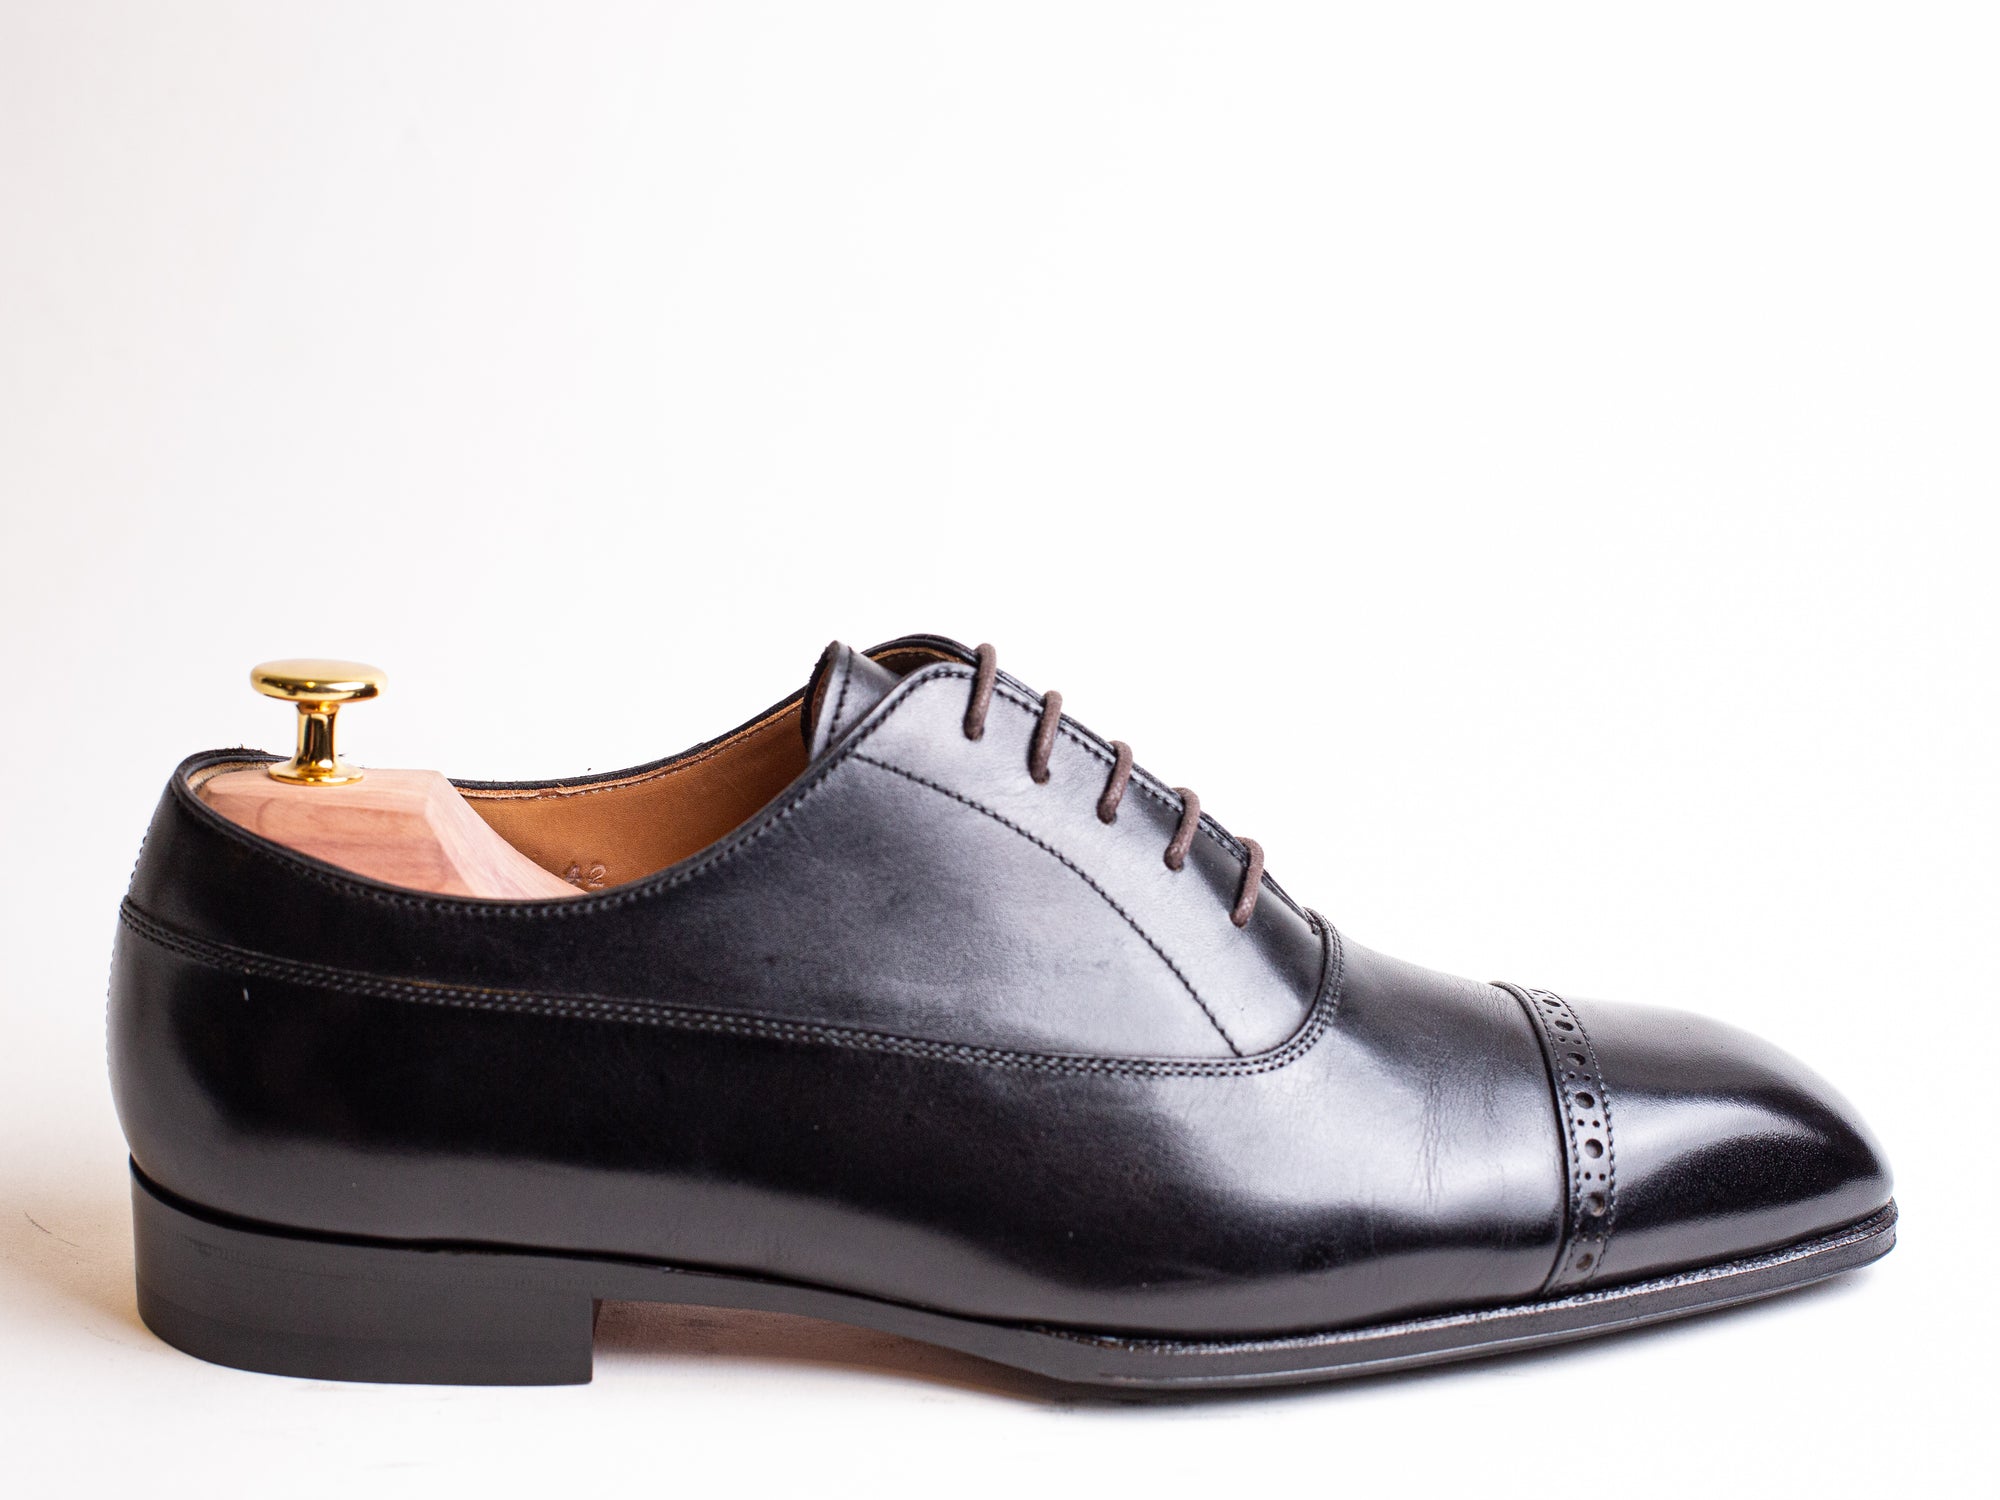 B1 Balmoral Oxfords - CNES Shoemaker